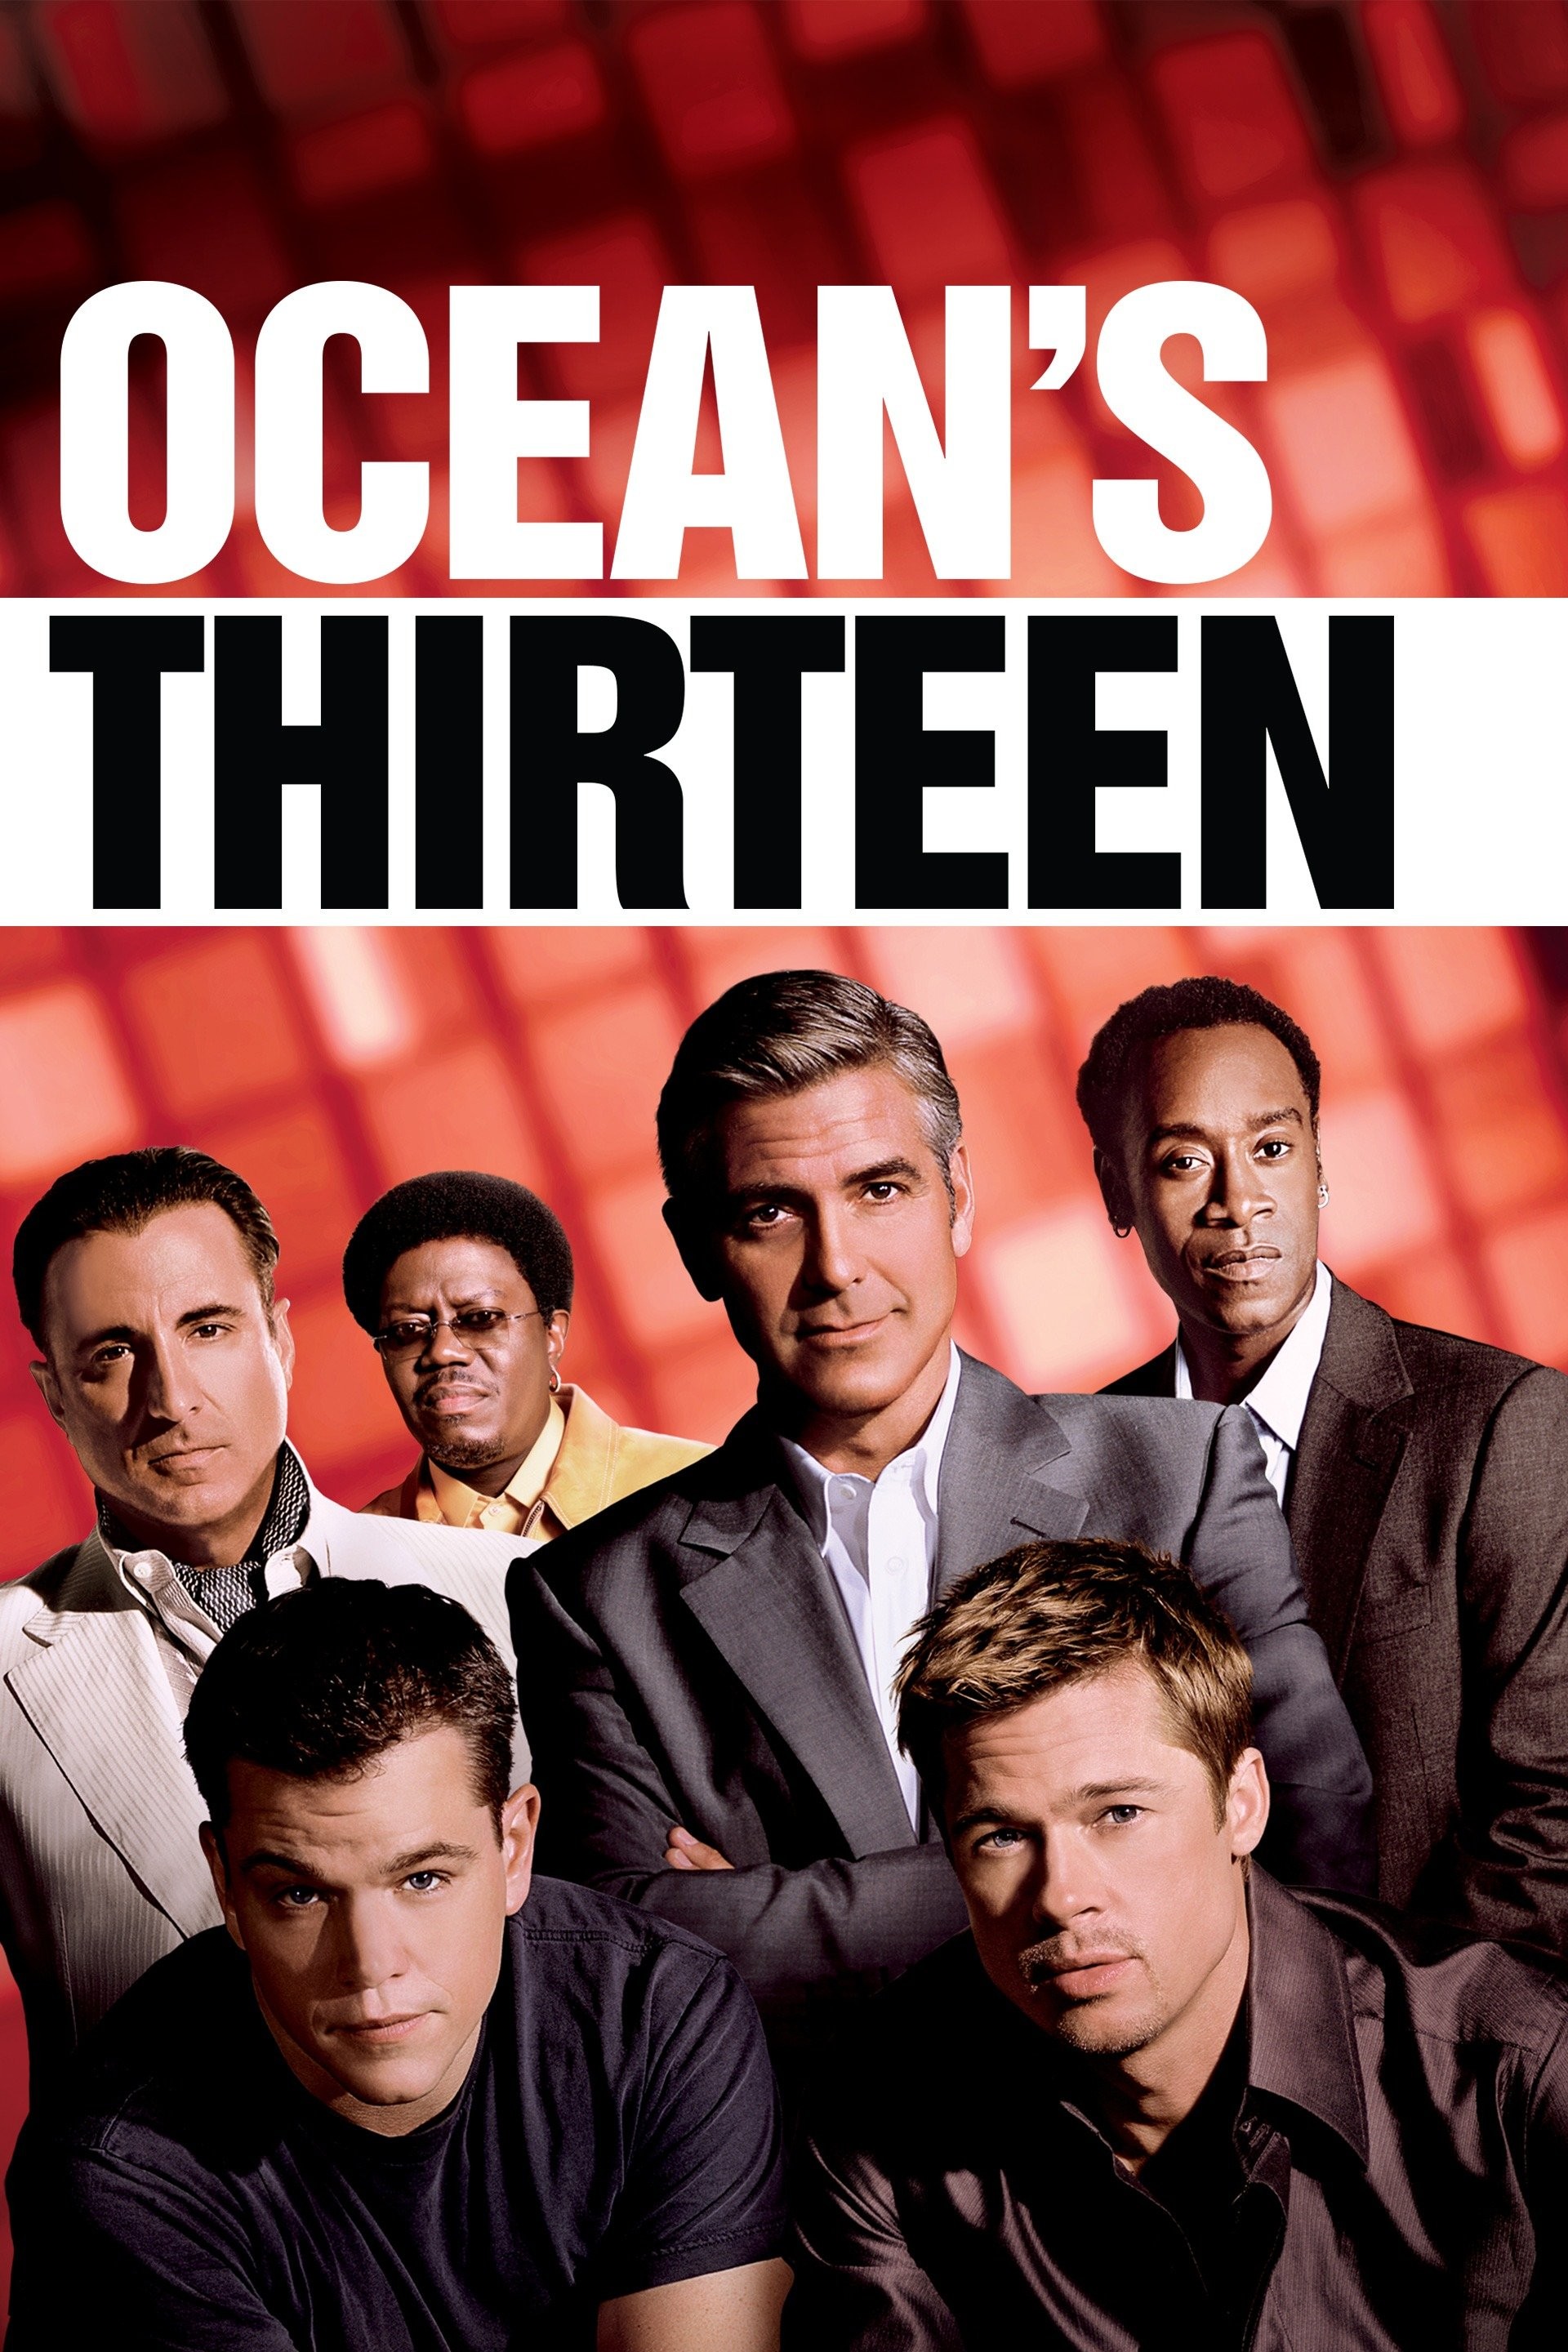 oceans thirteen imdb